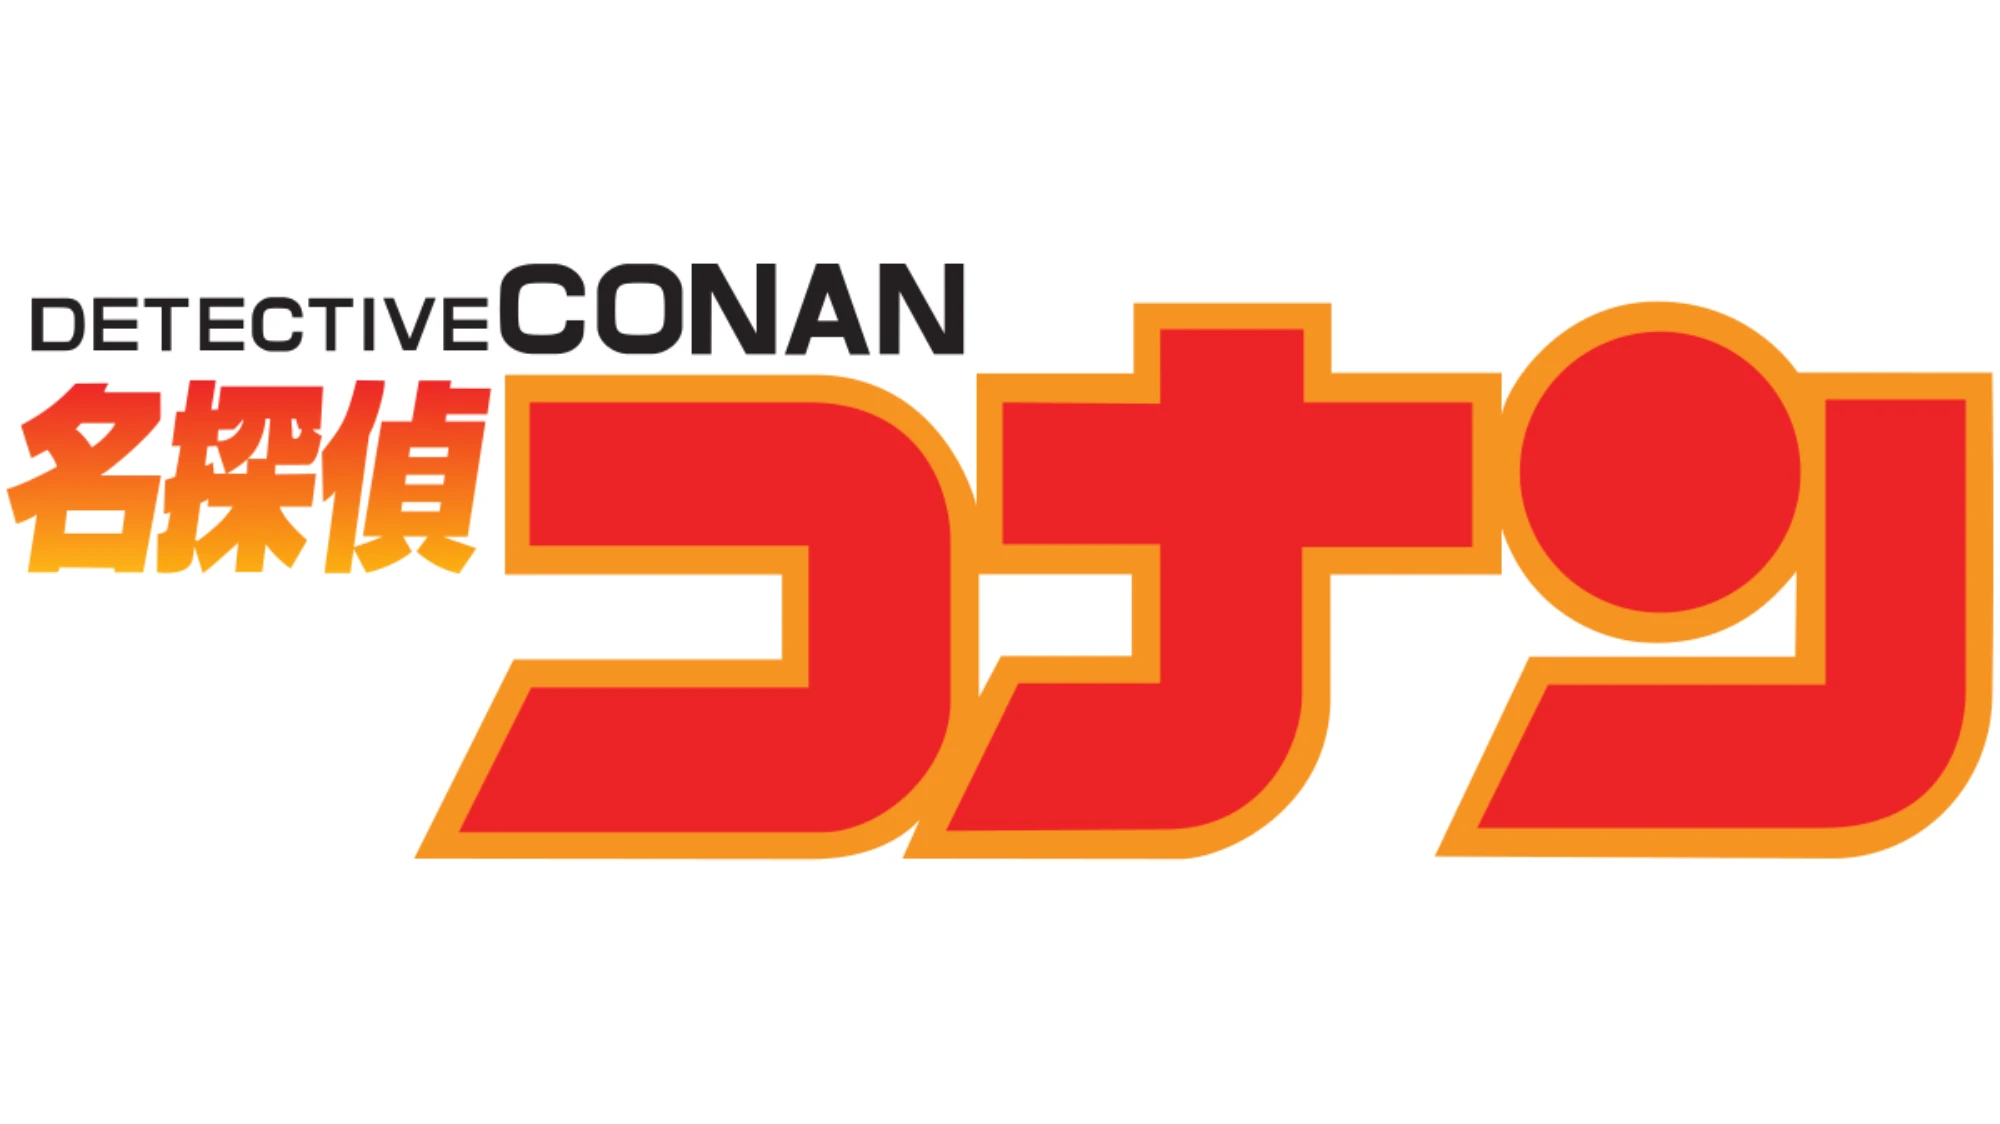 En este momento estás viendo Detective Conan